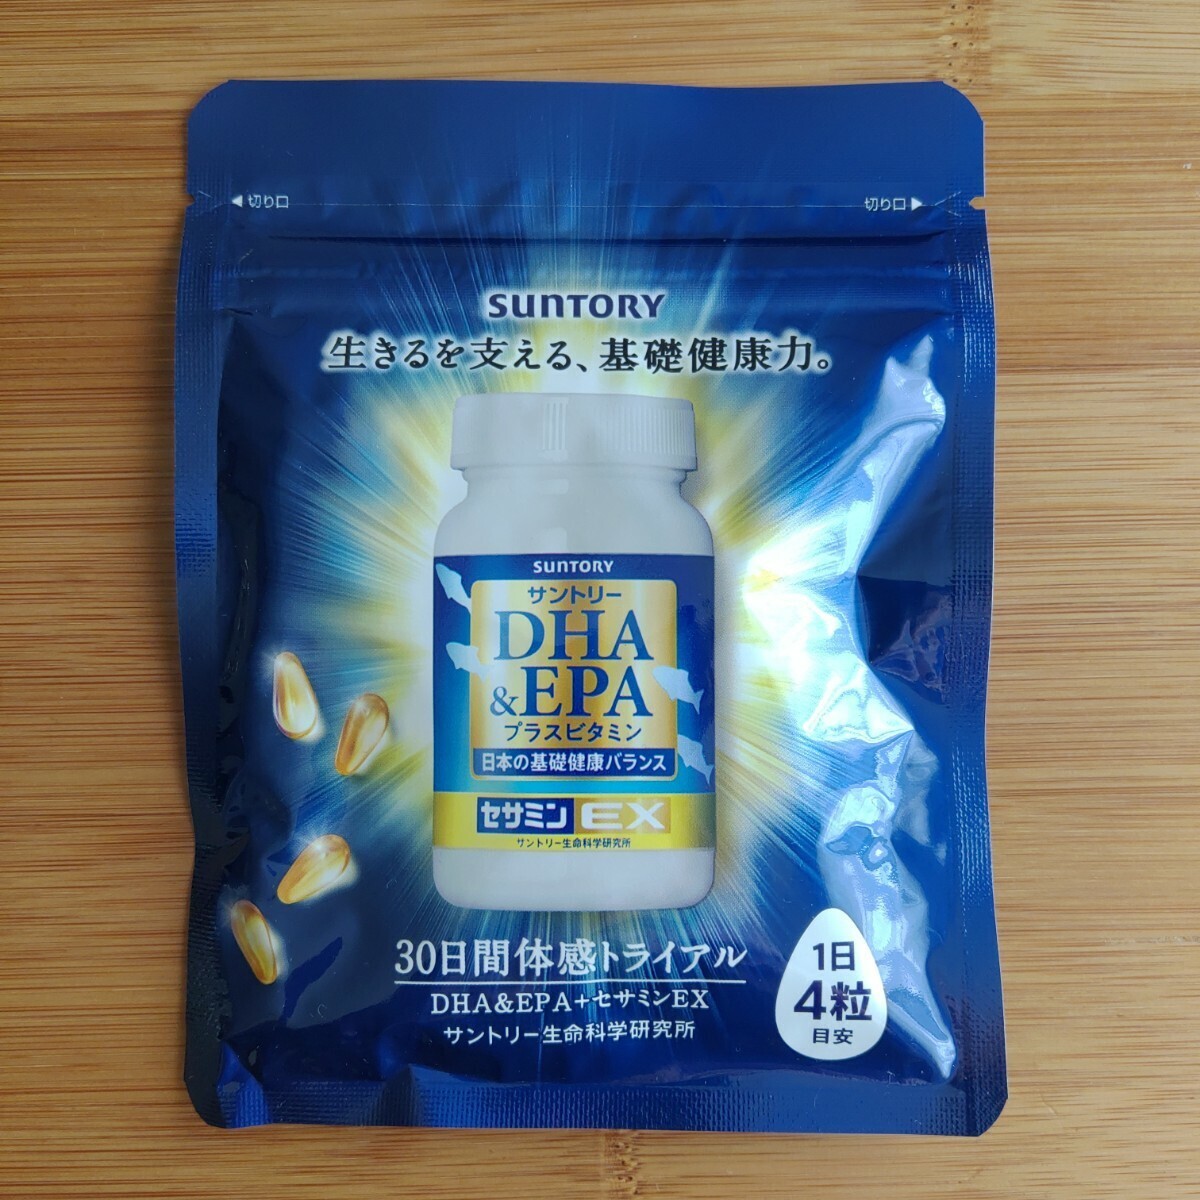  Suntory DHA EPA plus vitamin sesamin EX 120 bead 